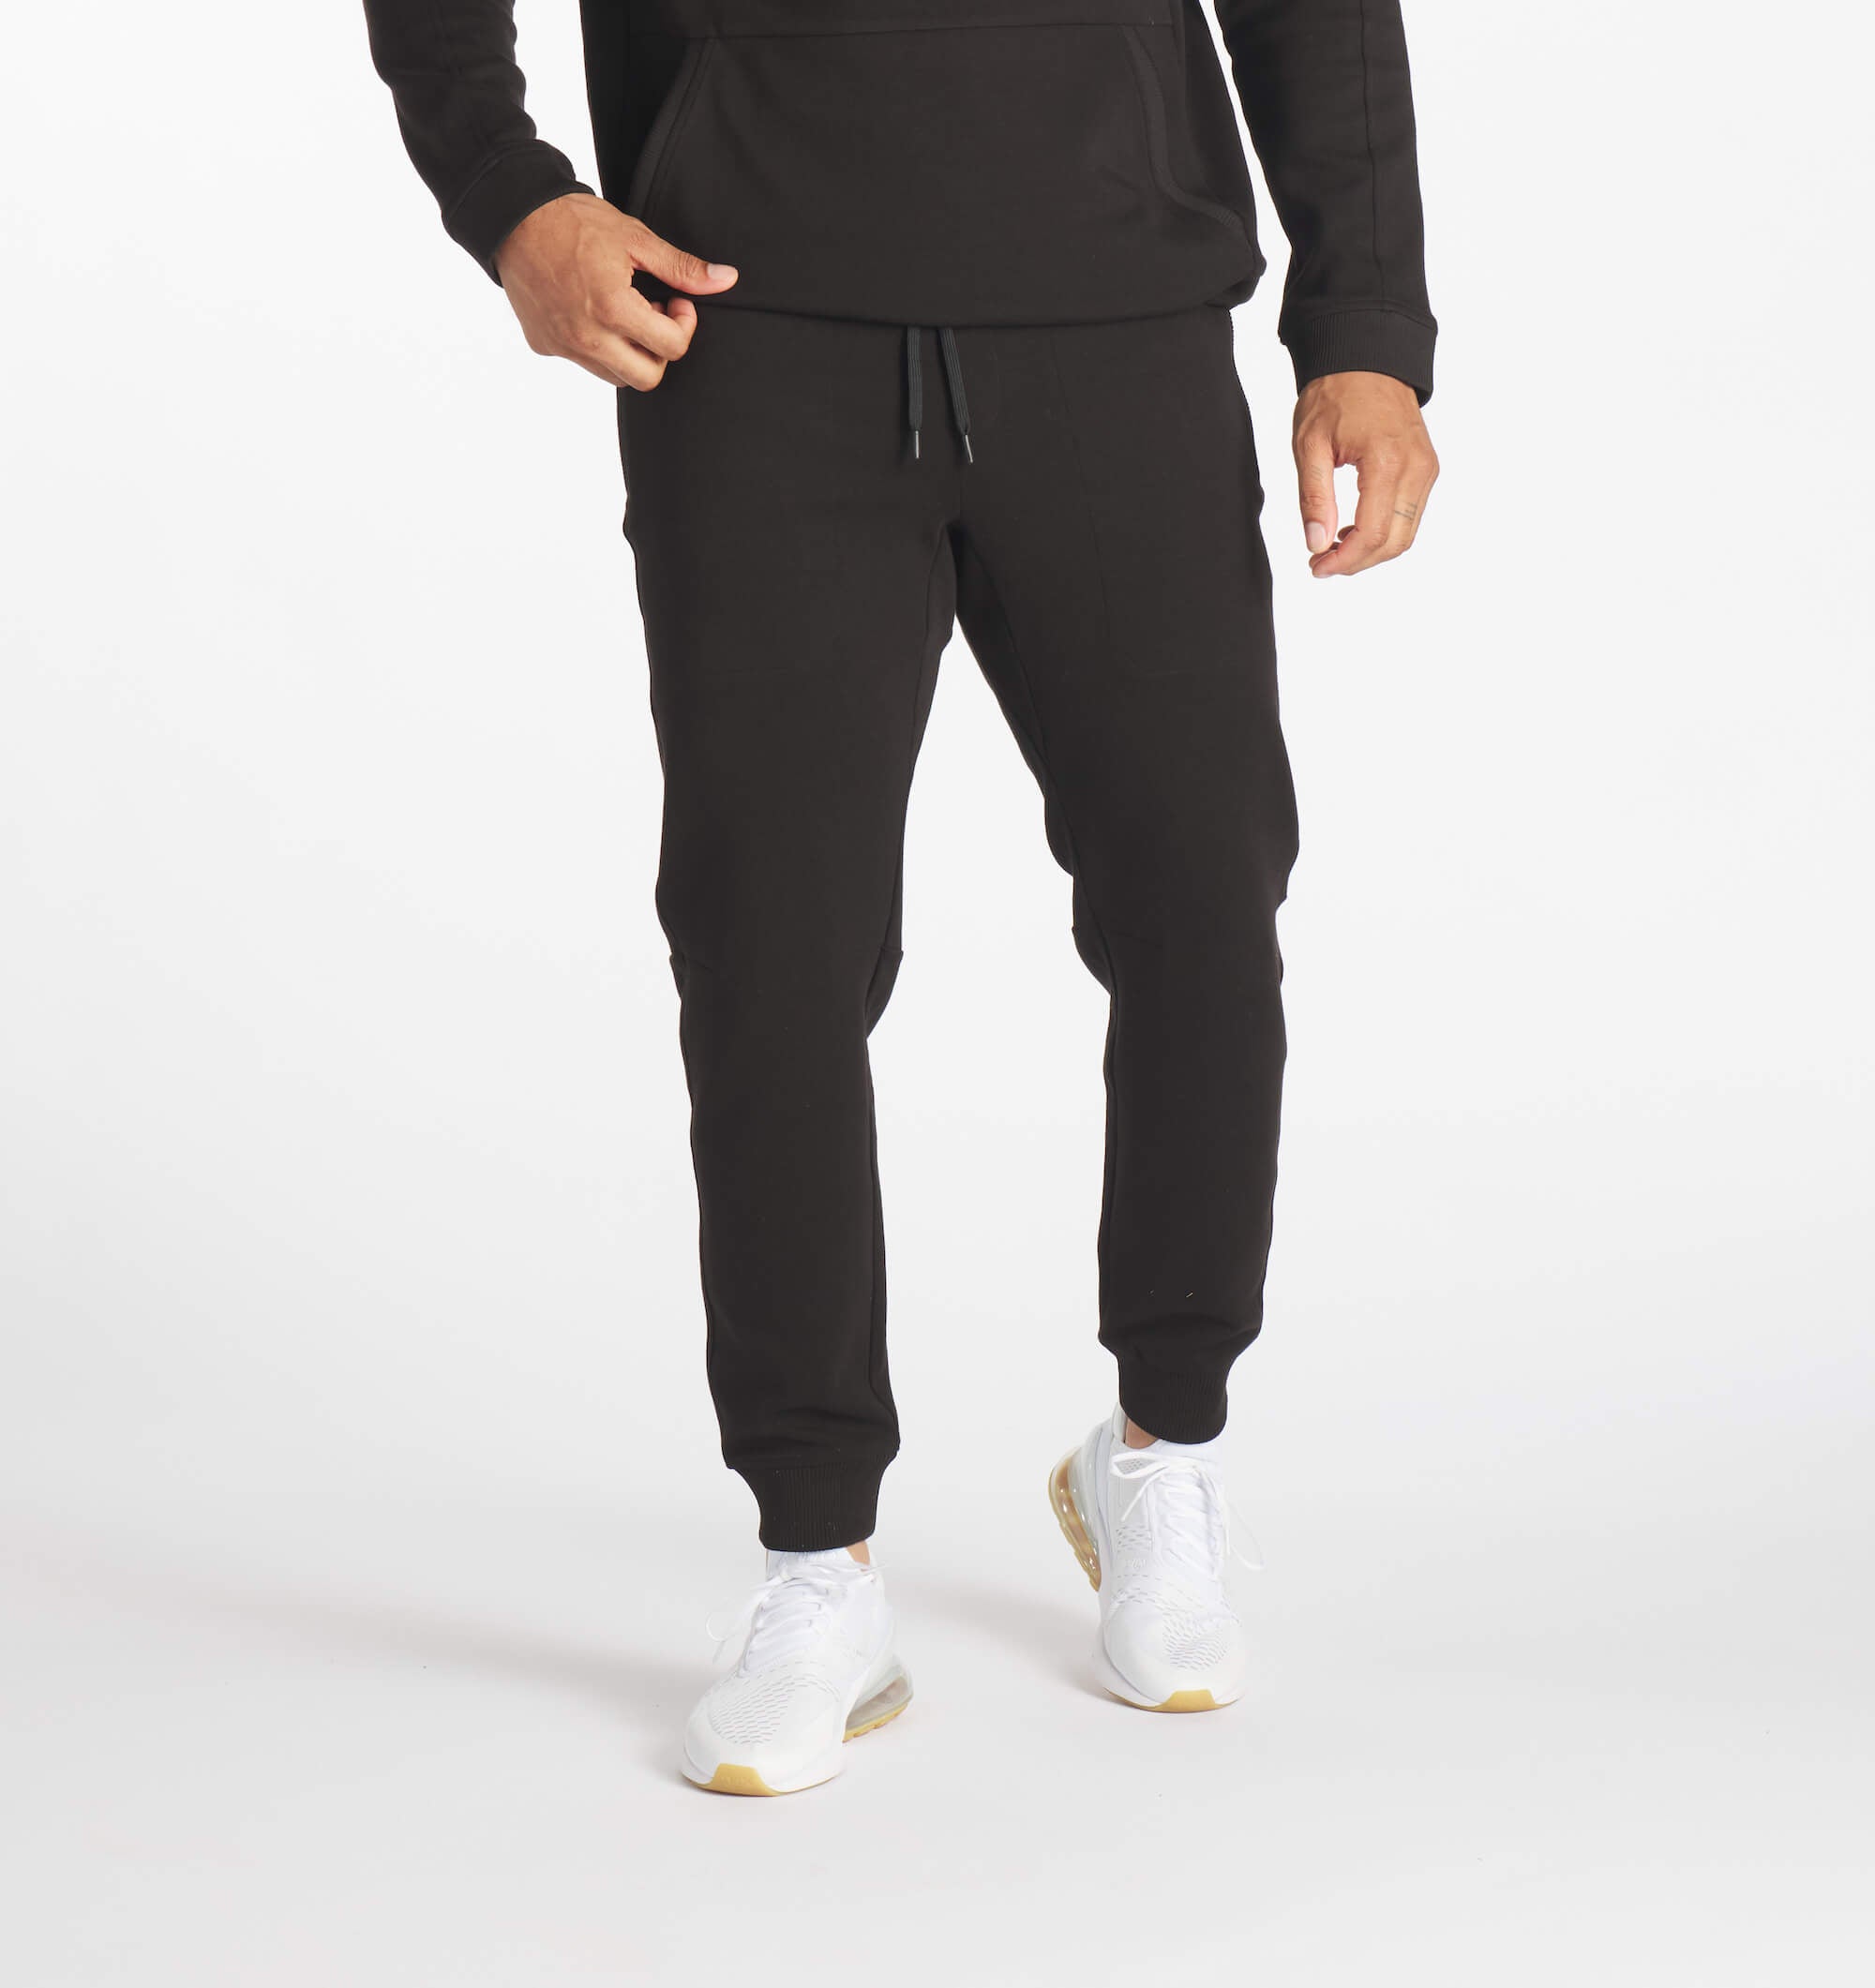 Men's Black Joggers: Shop All Black Jogger Pants For Great Street